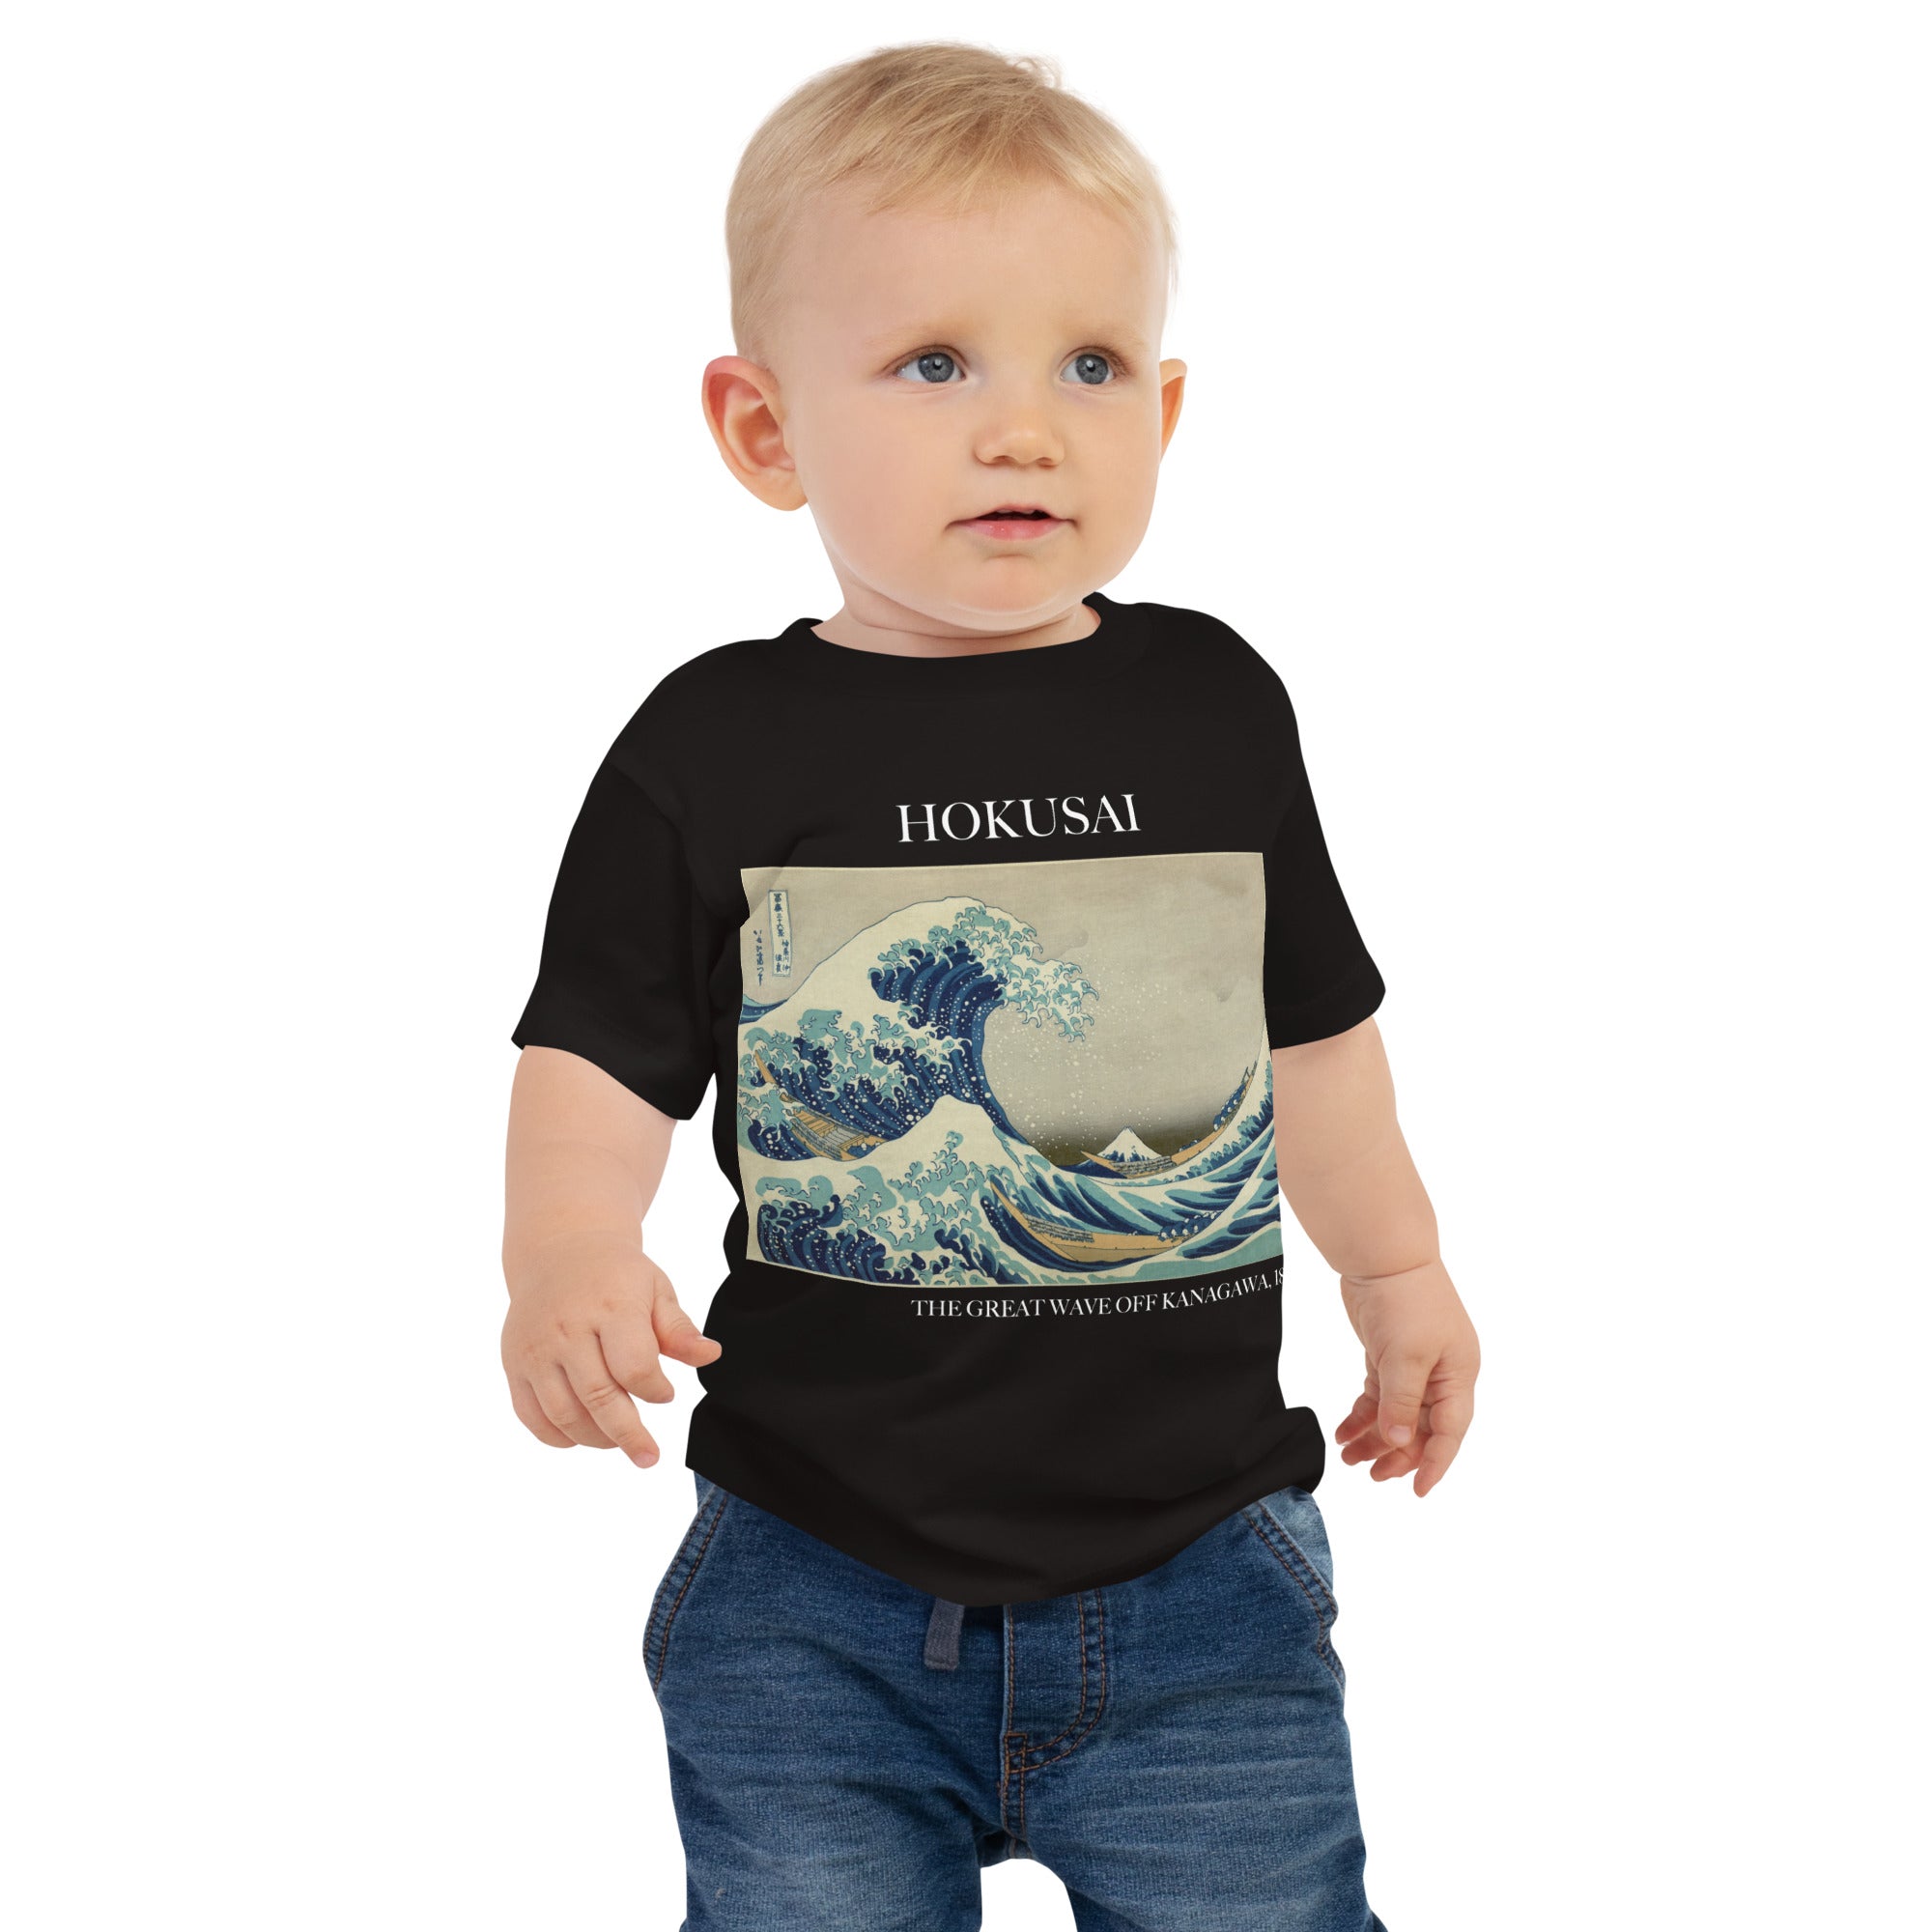 Hokusai 'The Great Wave off Kanagawa' Famous Painting Baby Staple T-Shirt | Premium Baby Art Tee